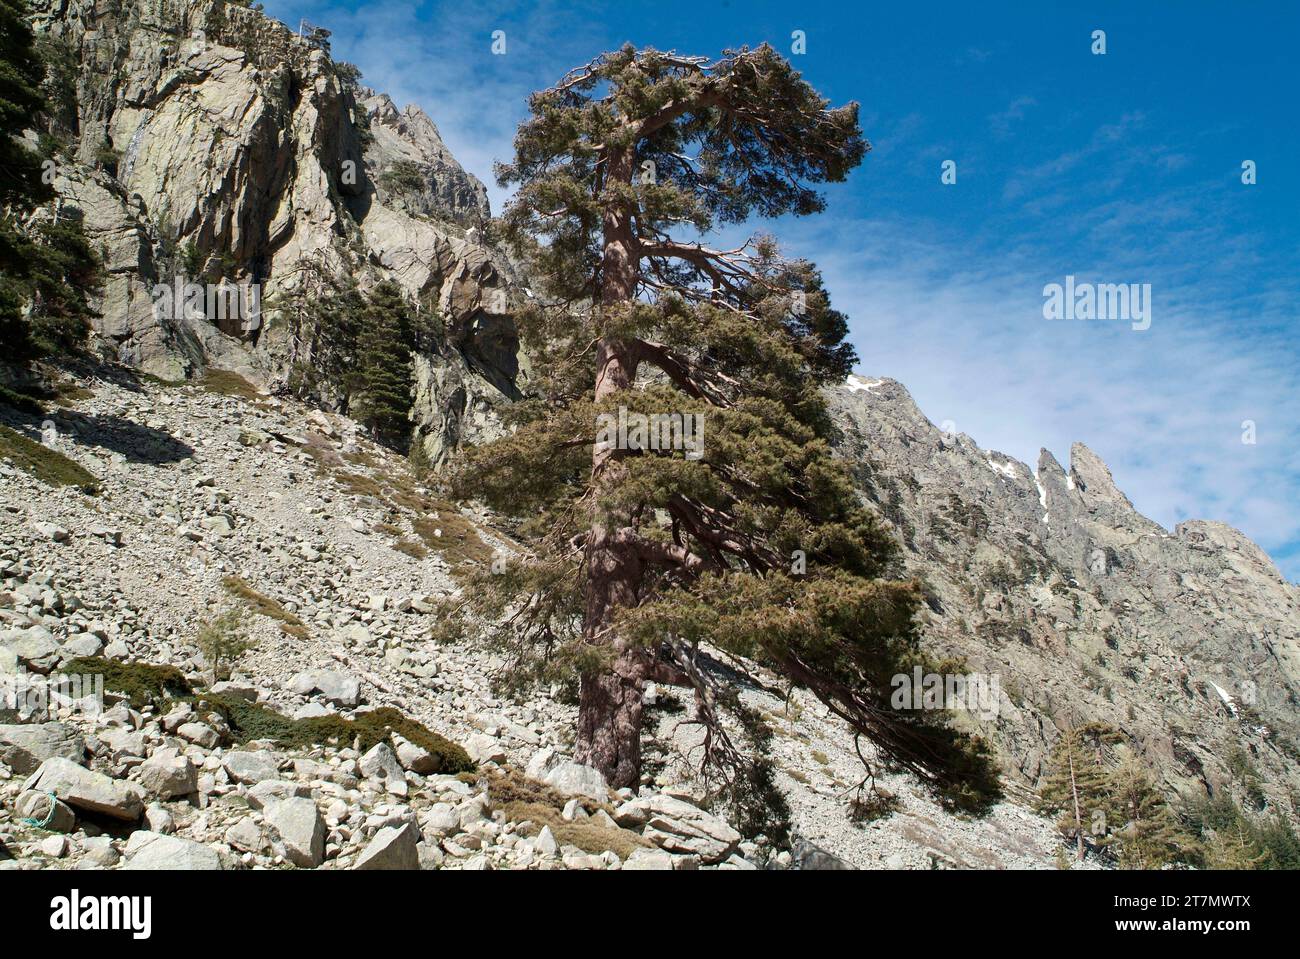 Pinus nigra corsicana or Pinus nigra salzmannii corsicana is an evergreen tree native to Corsica. This photo was taken in Asco, Corsica, France. Stock Photo